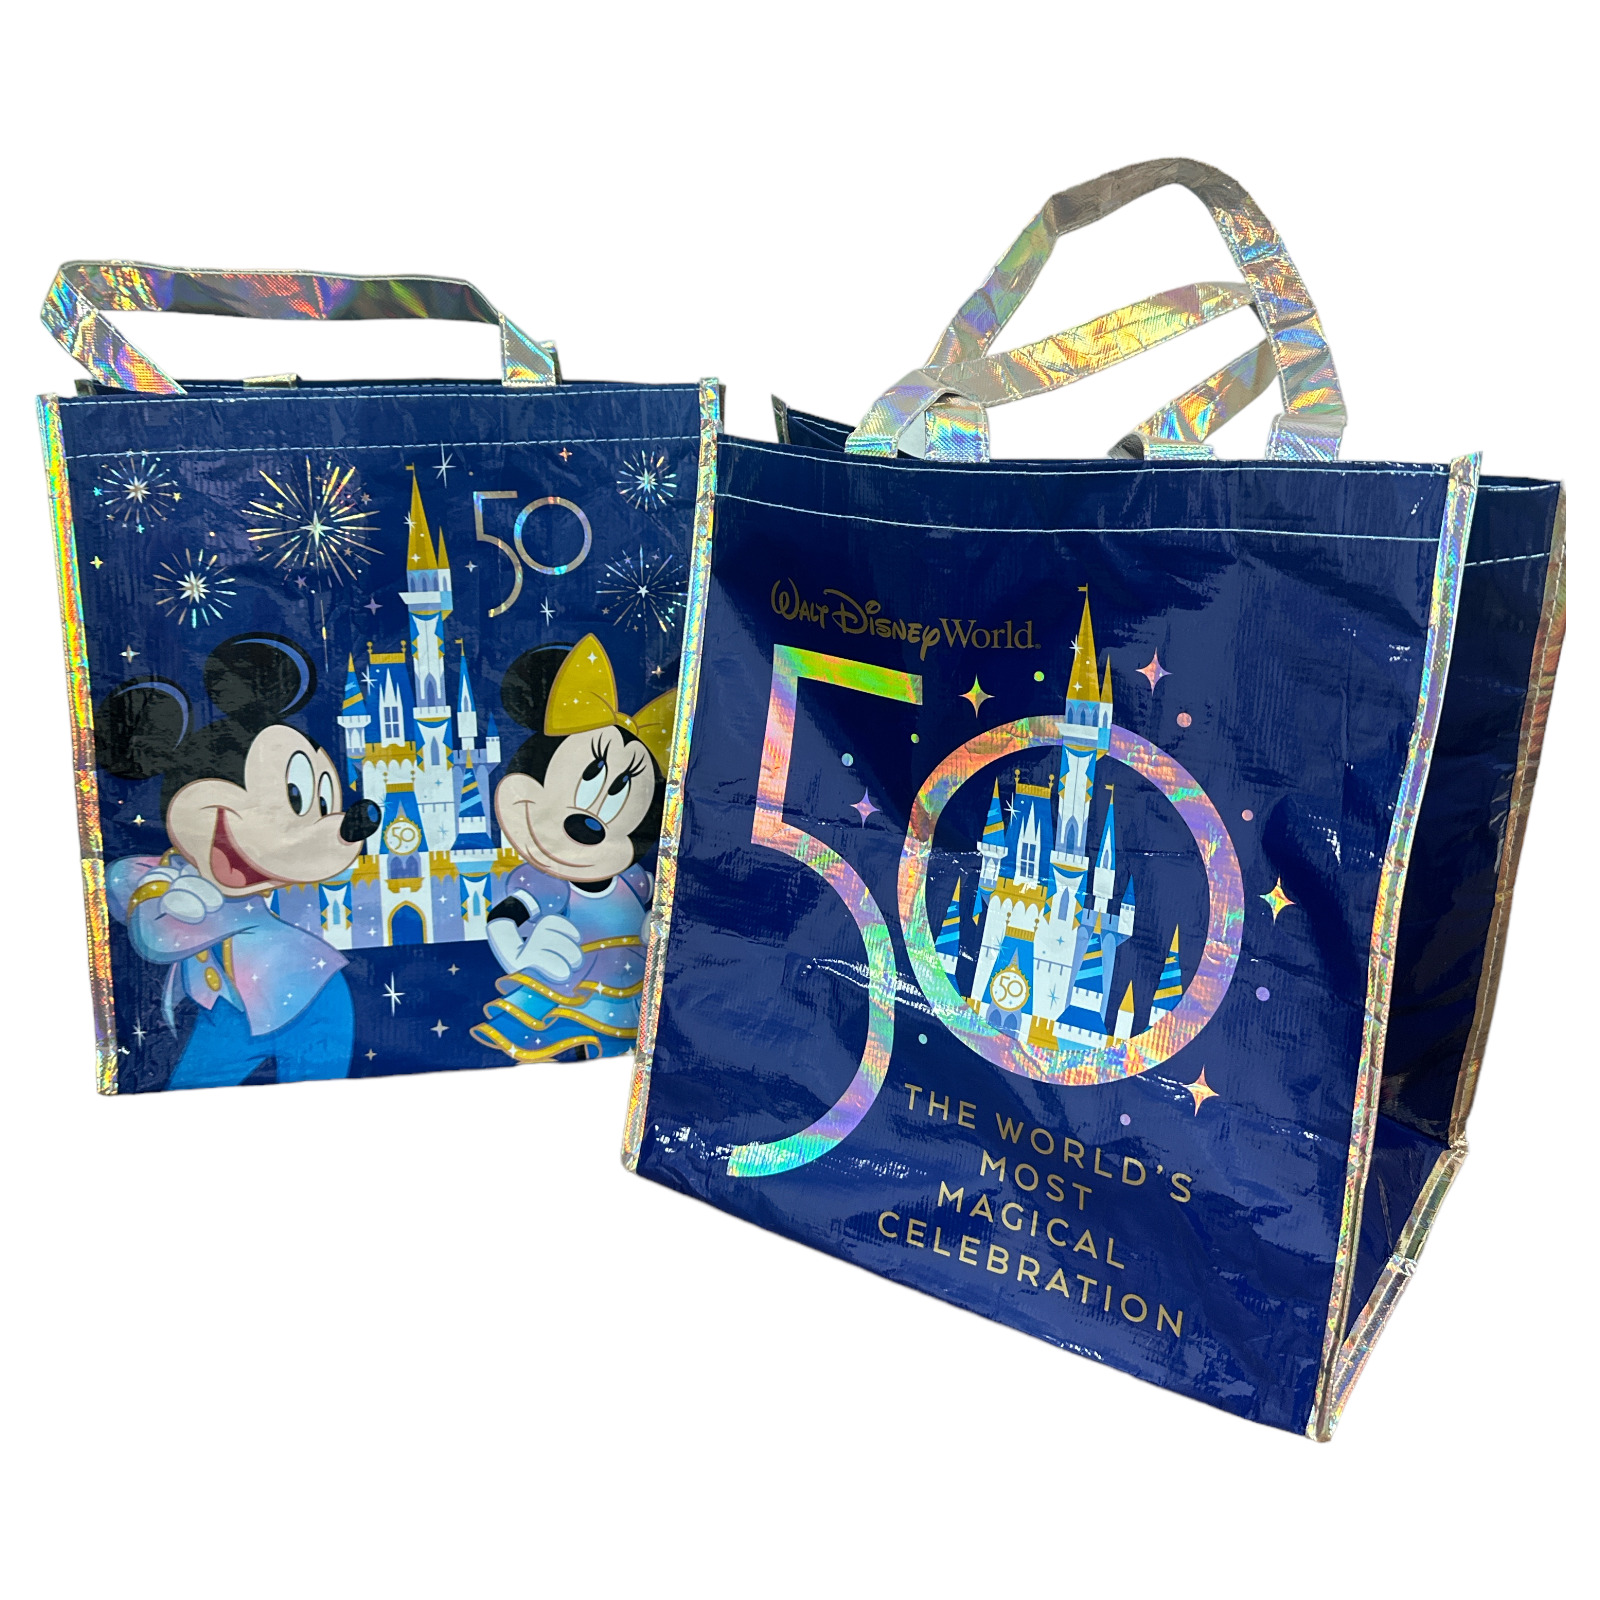 Disney Parks 50th Anniversary Reusable Bag - Medium Size, Blue (LOT OF 2)